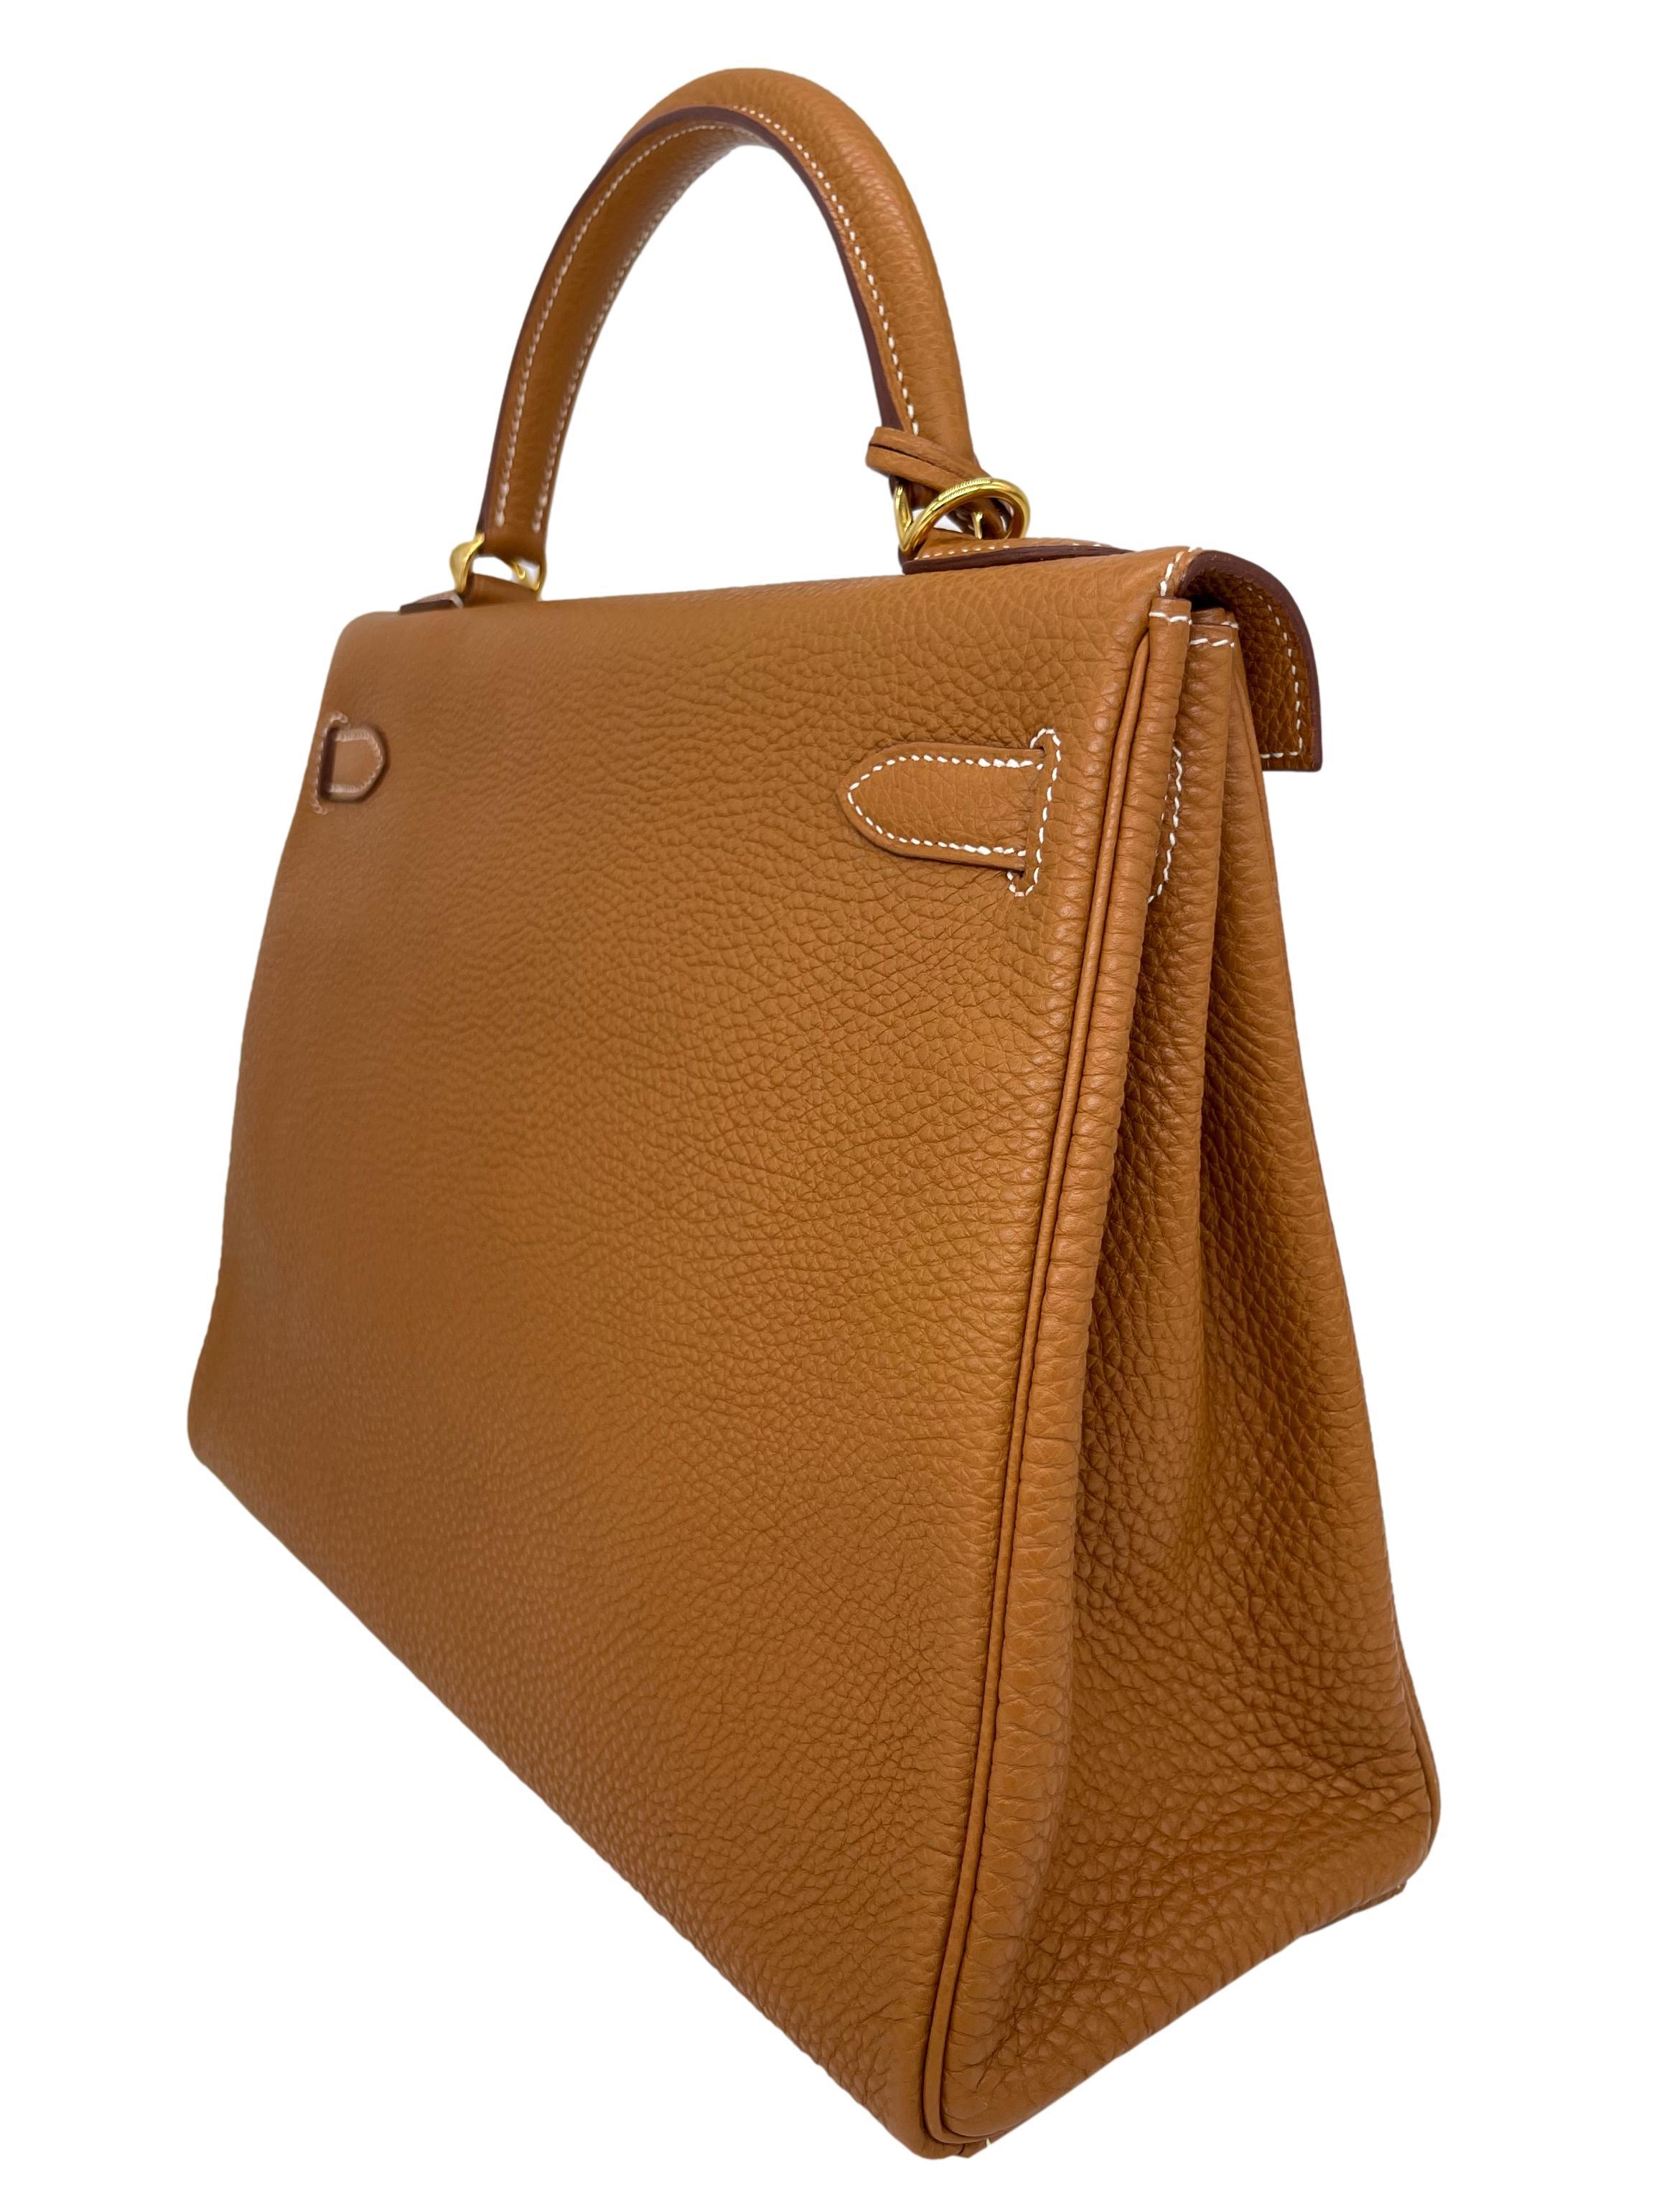 Hermès Natural Clemence Retourne Kelly Handbag with Gold Hardware 32cm, 2007. 2